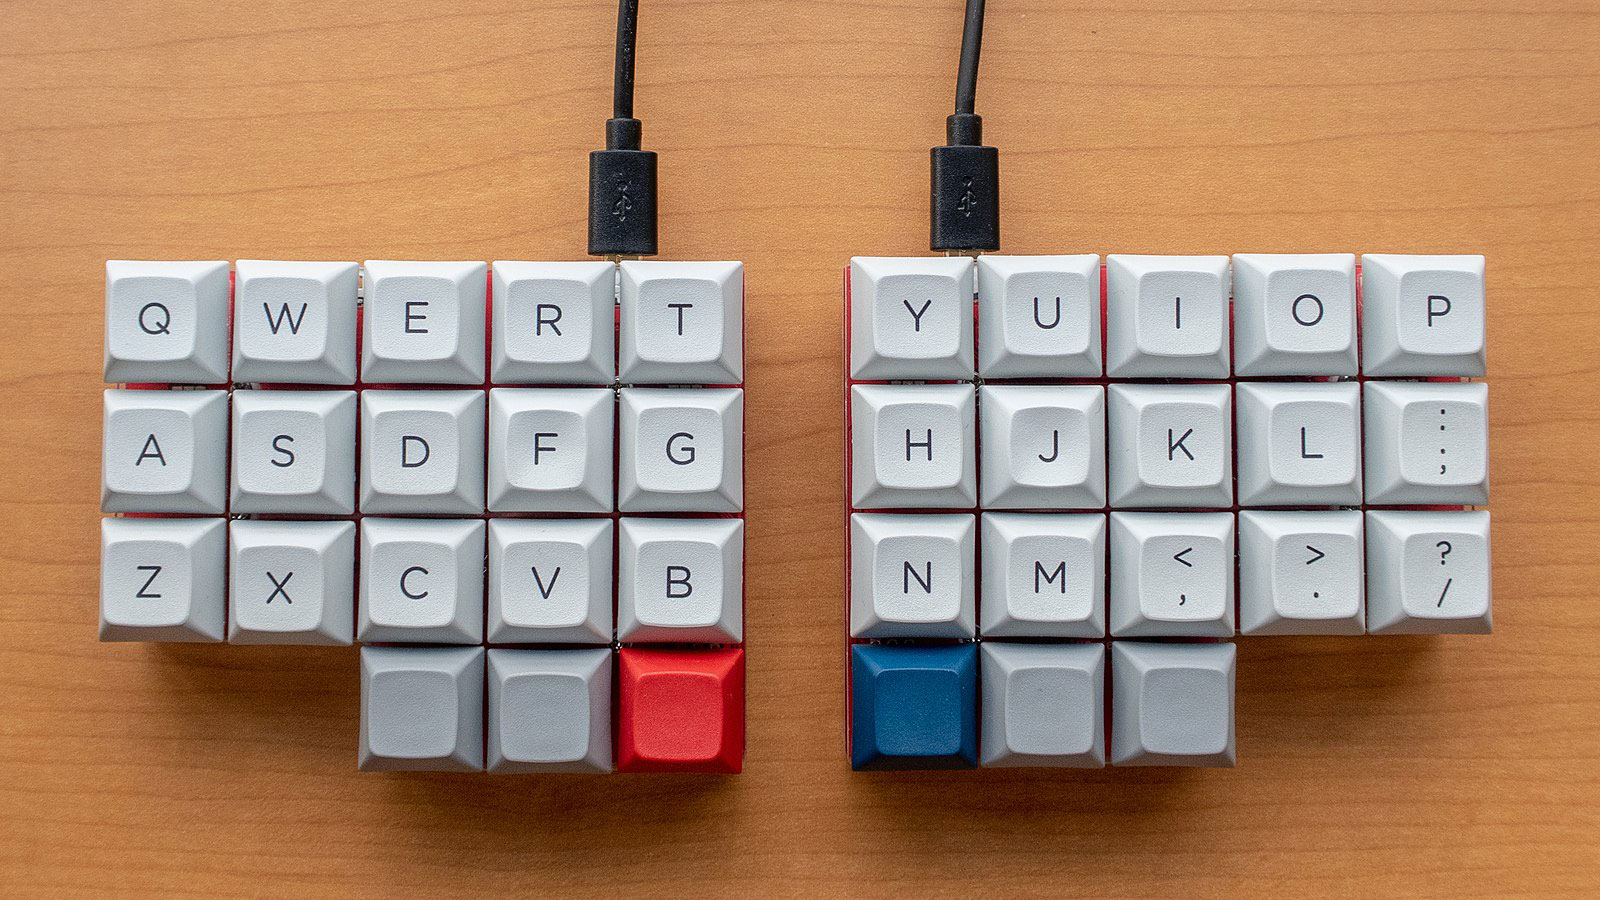 A split ortholinear keyboard. Note the vertically aligned keys